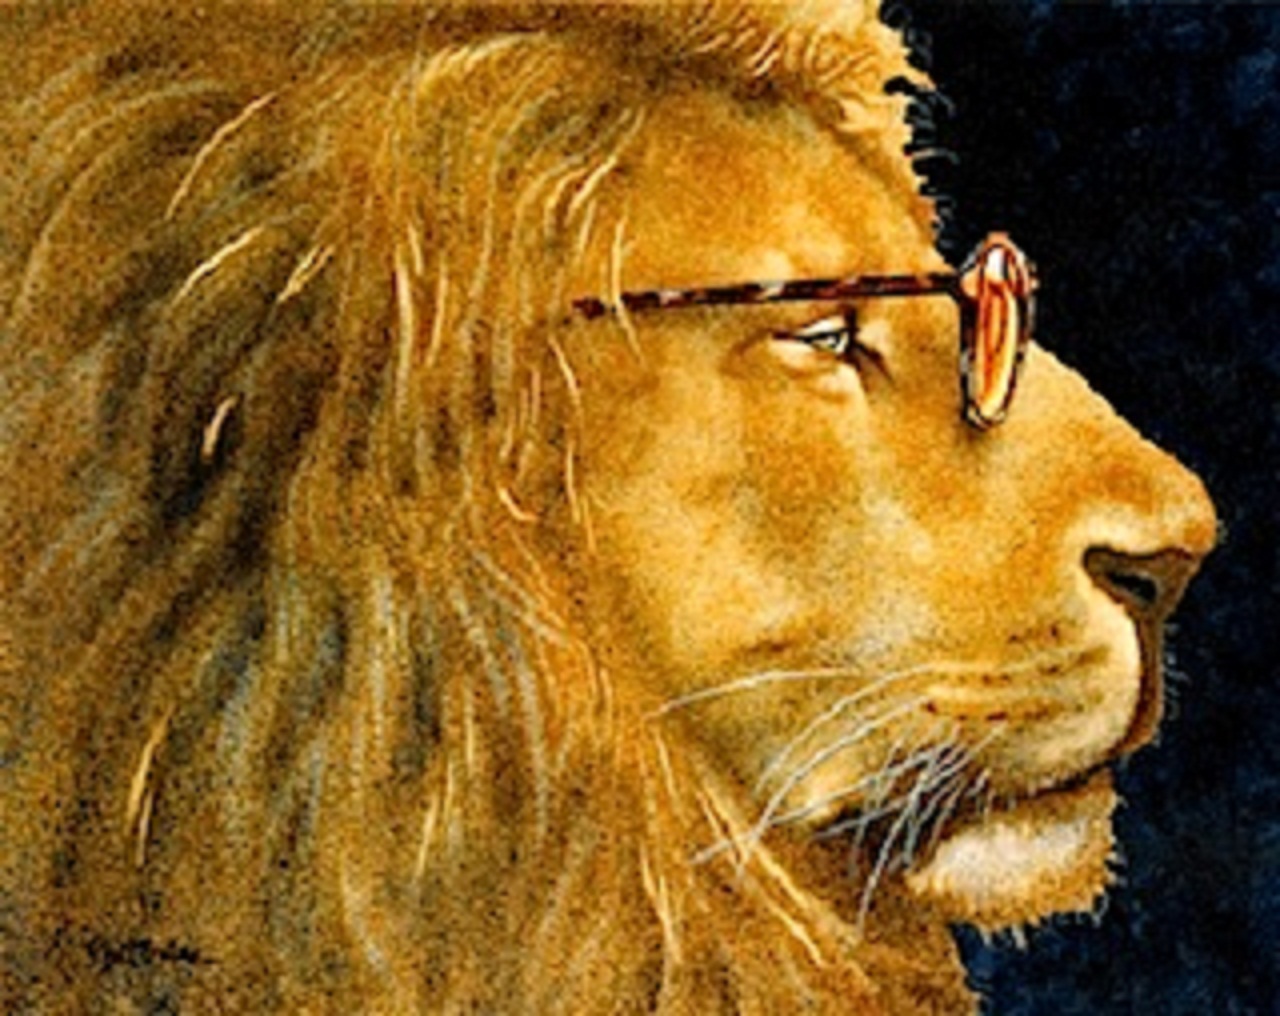 "The See Lion" © Will Bullas www.willbullas.com